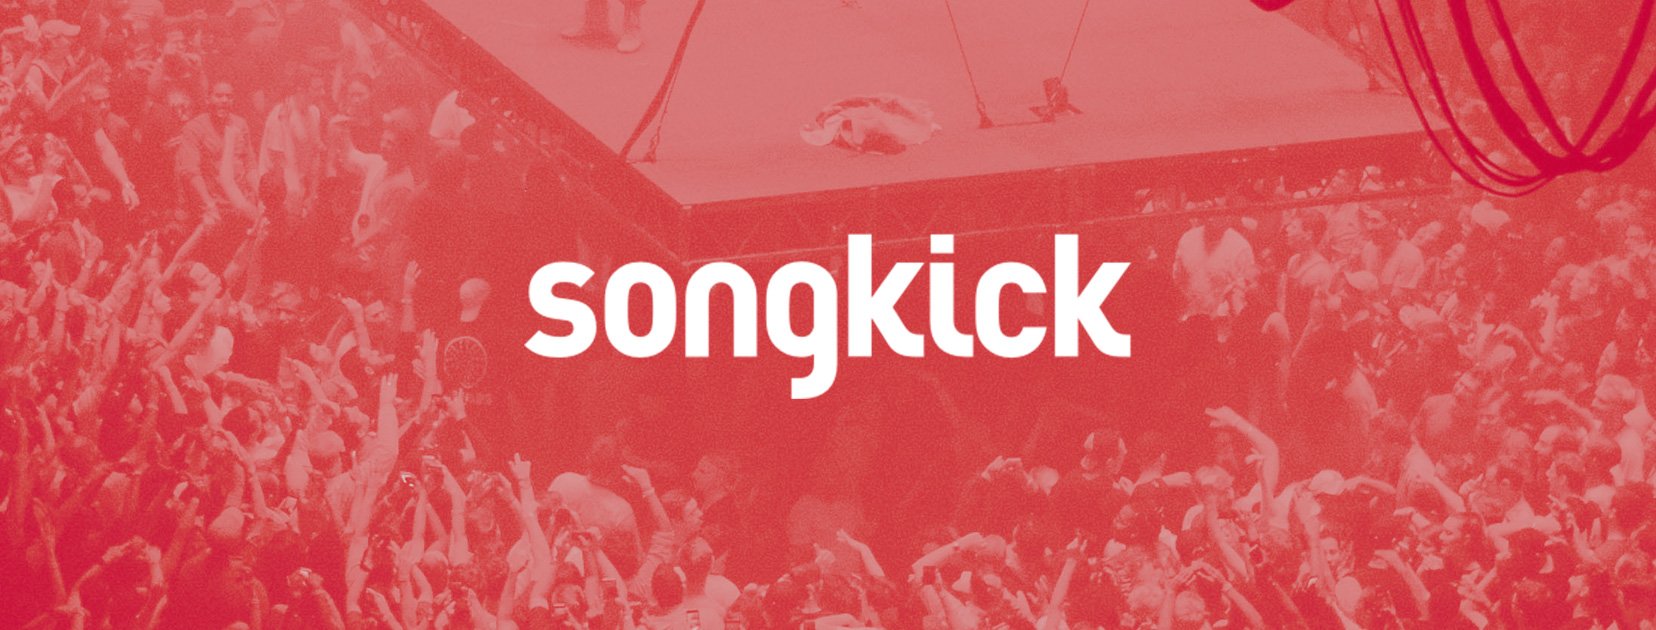 Songkick report “175 million music fans annually” on their platform